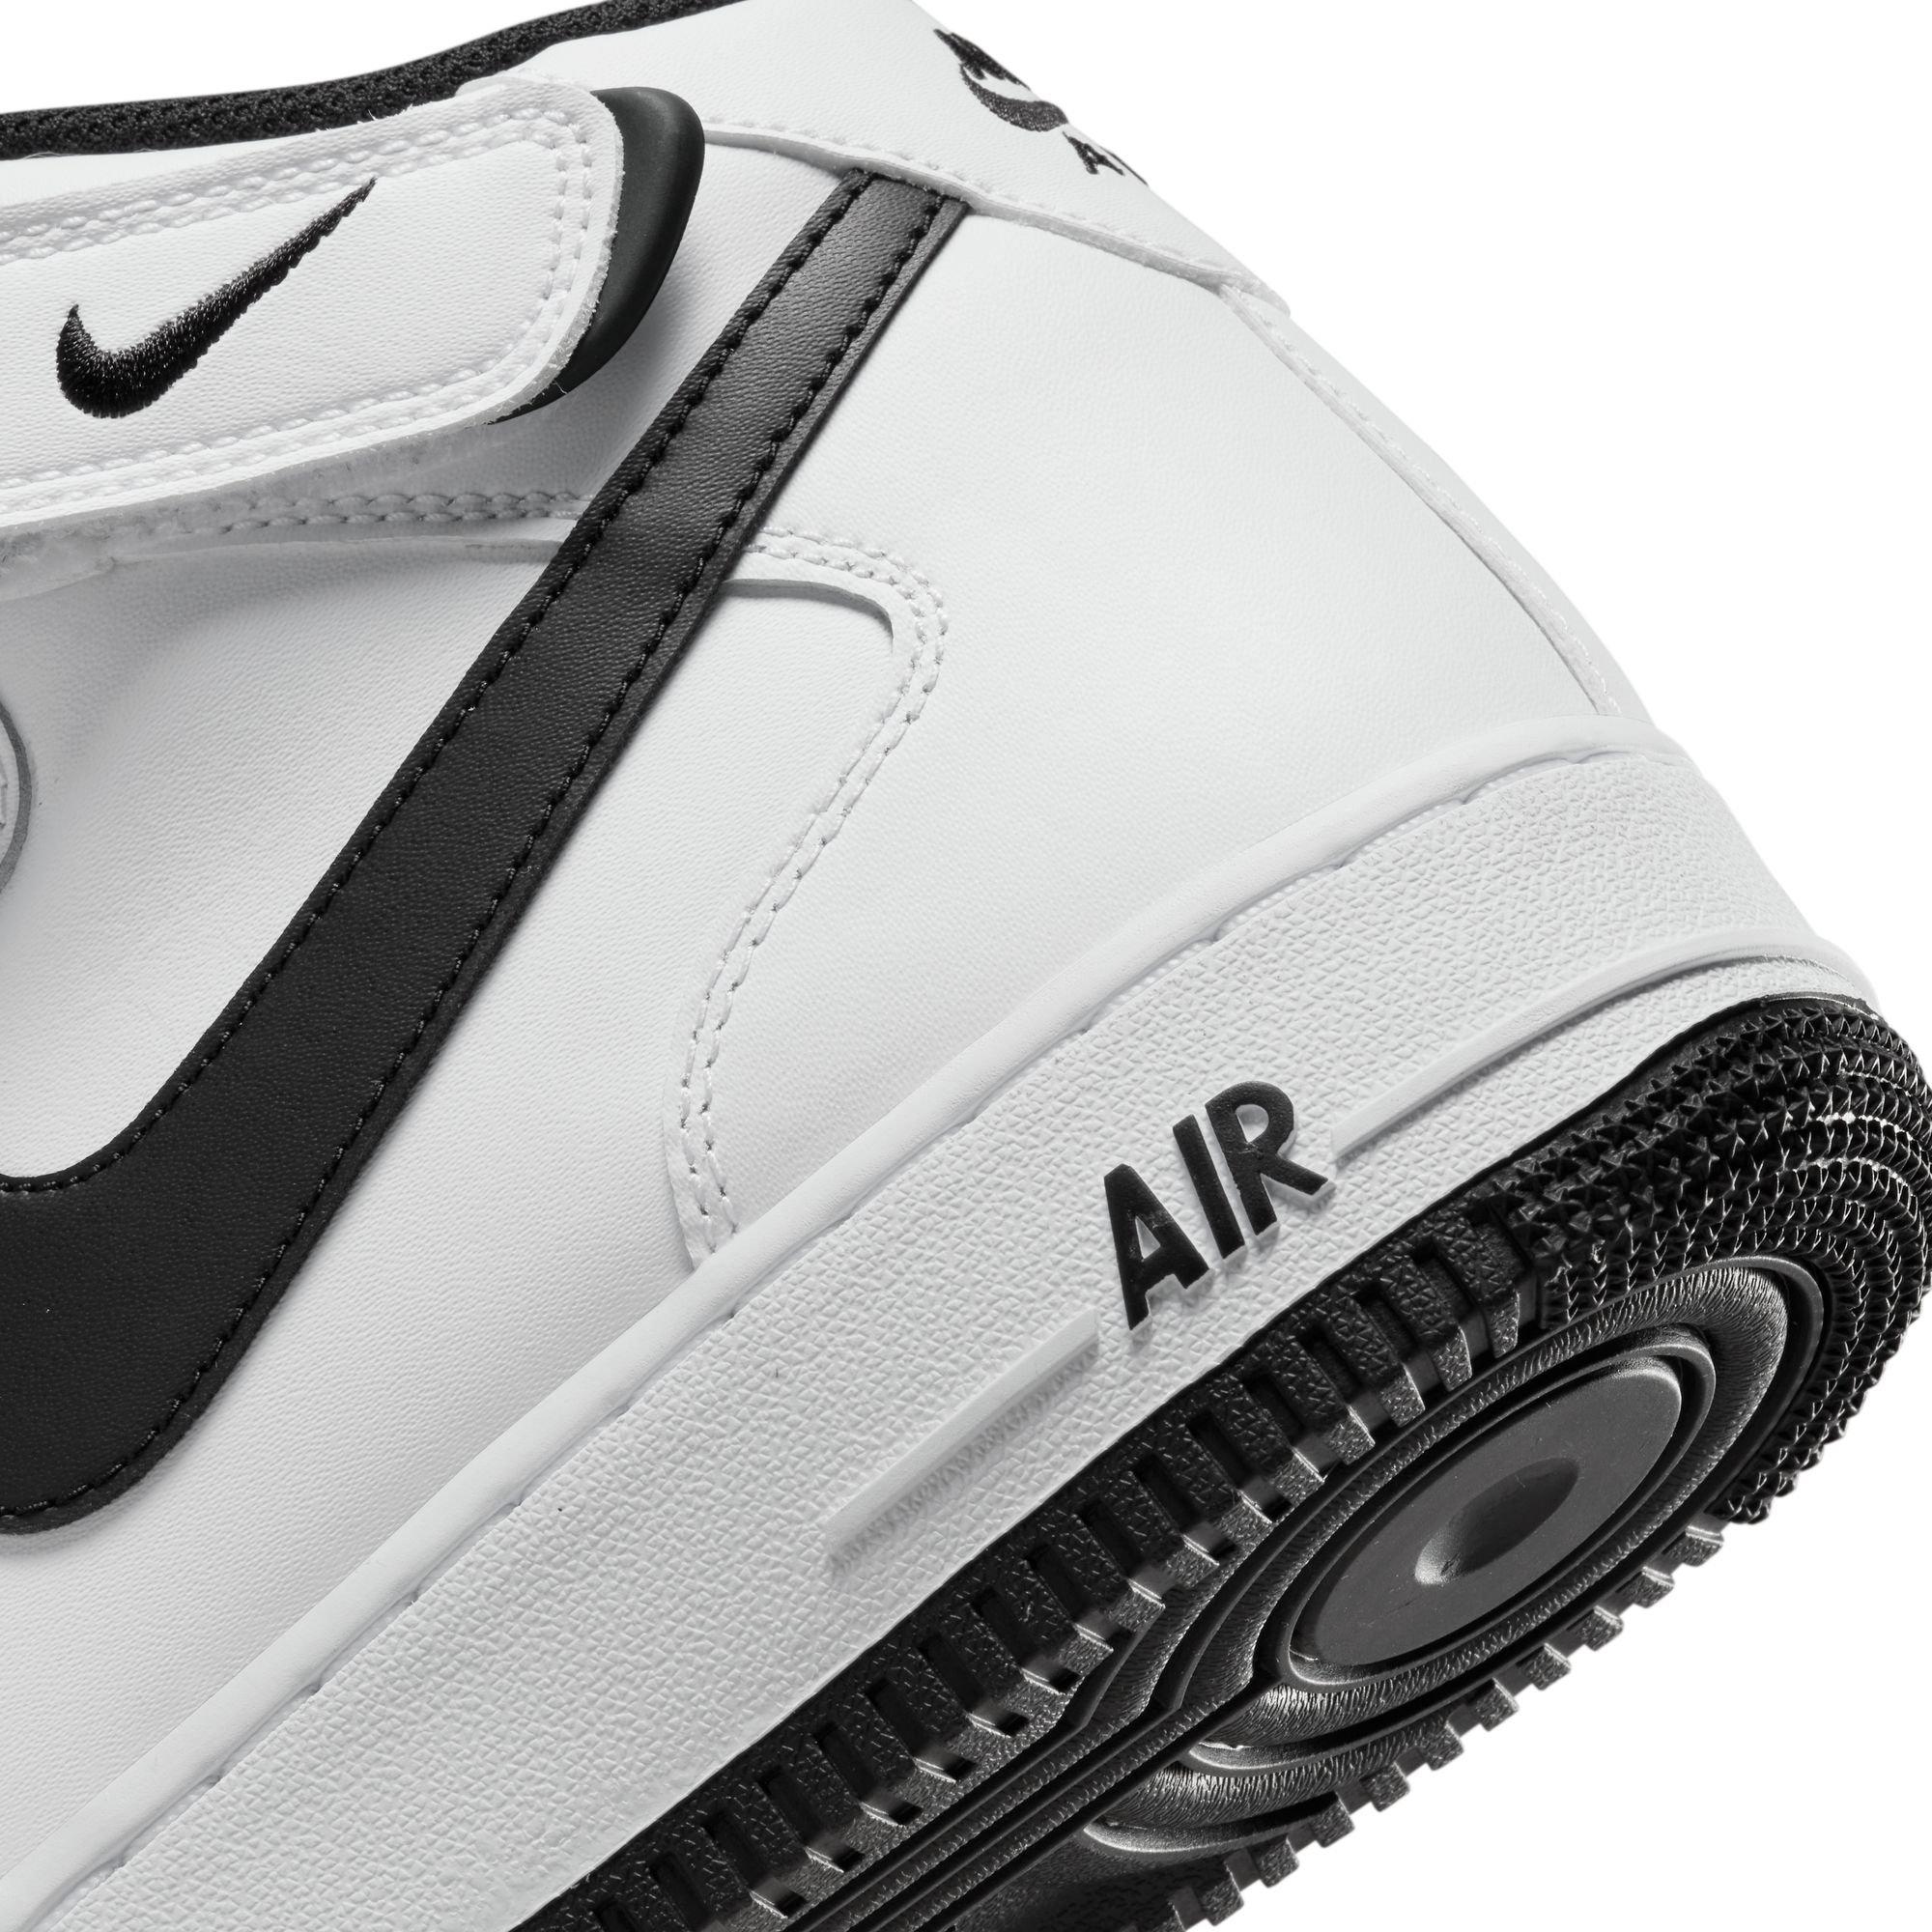 StclaircomoShops - Nike Air Force 1 07 Mid Colorful Black White